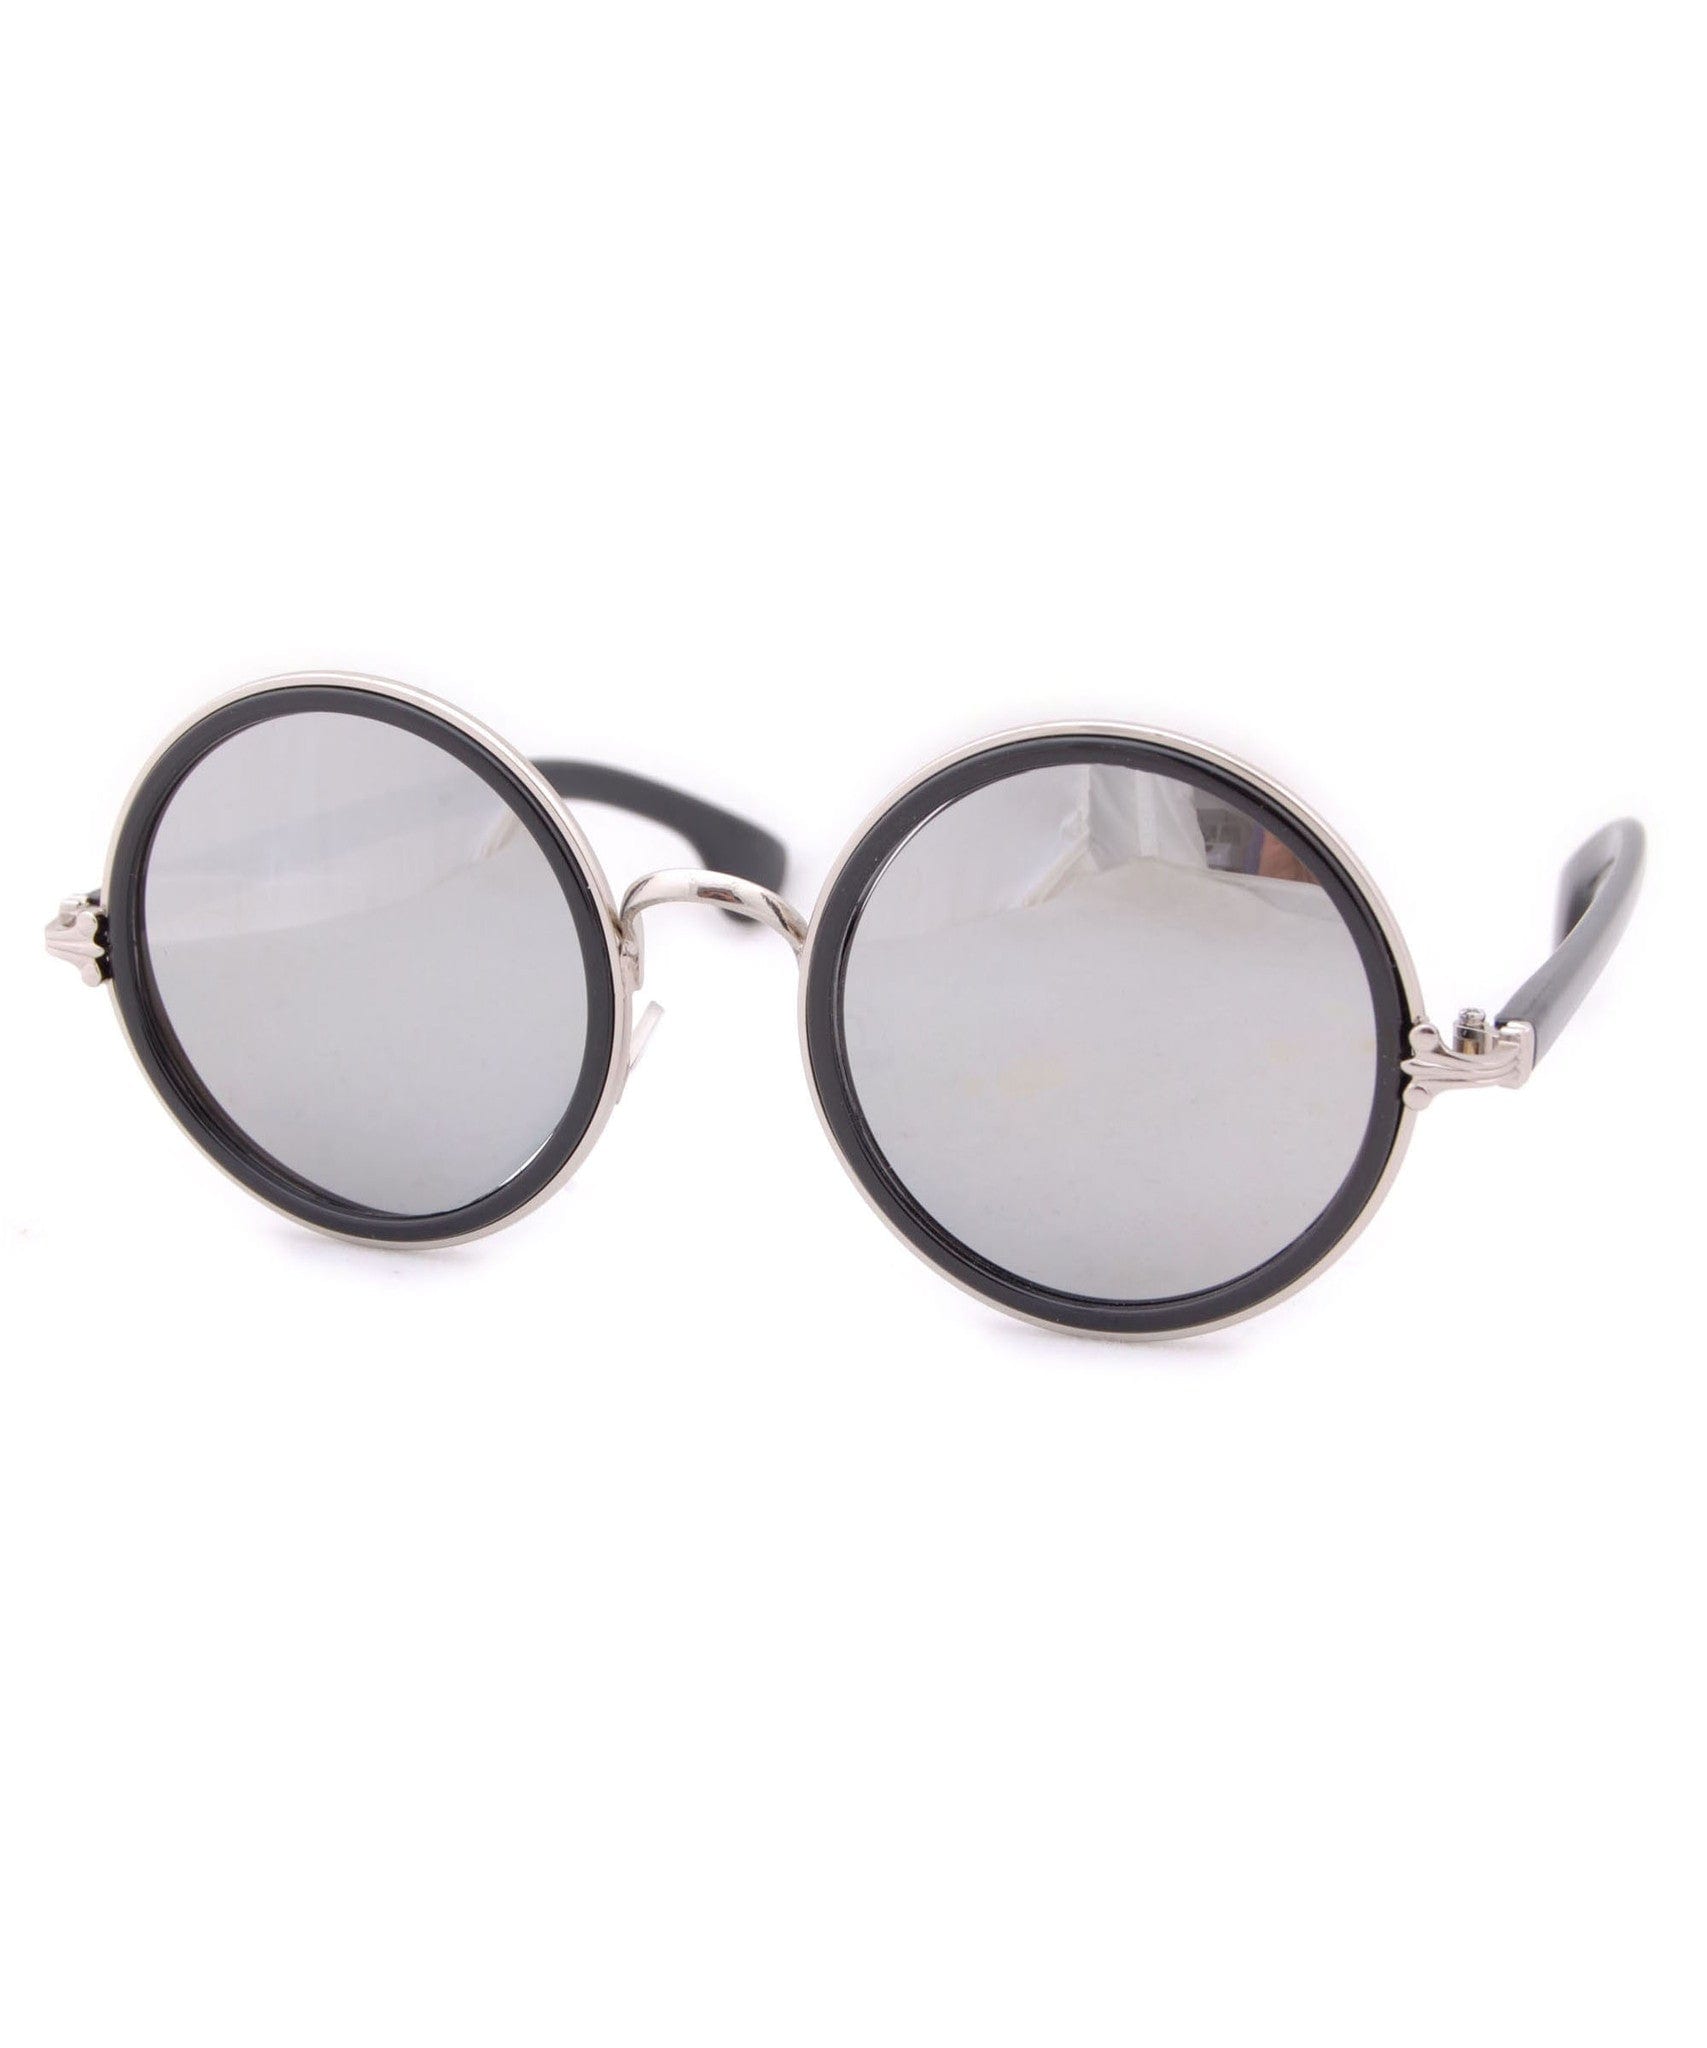 watson black mirror sunglasses